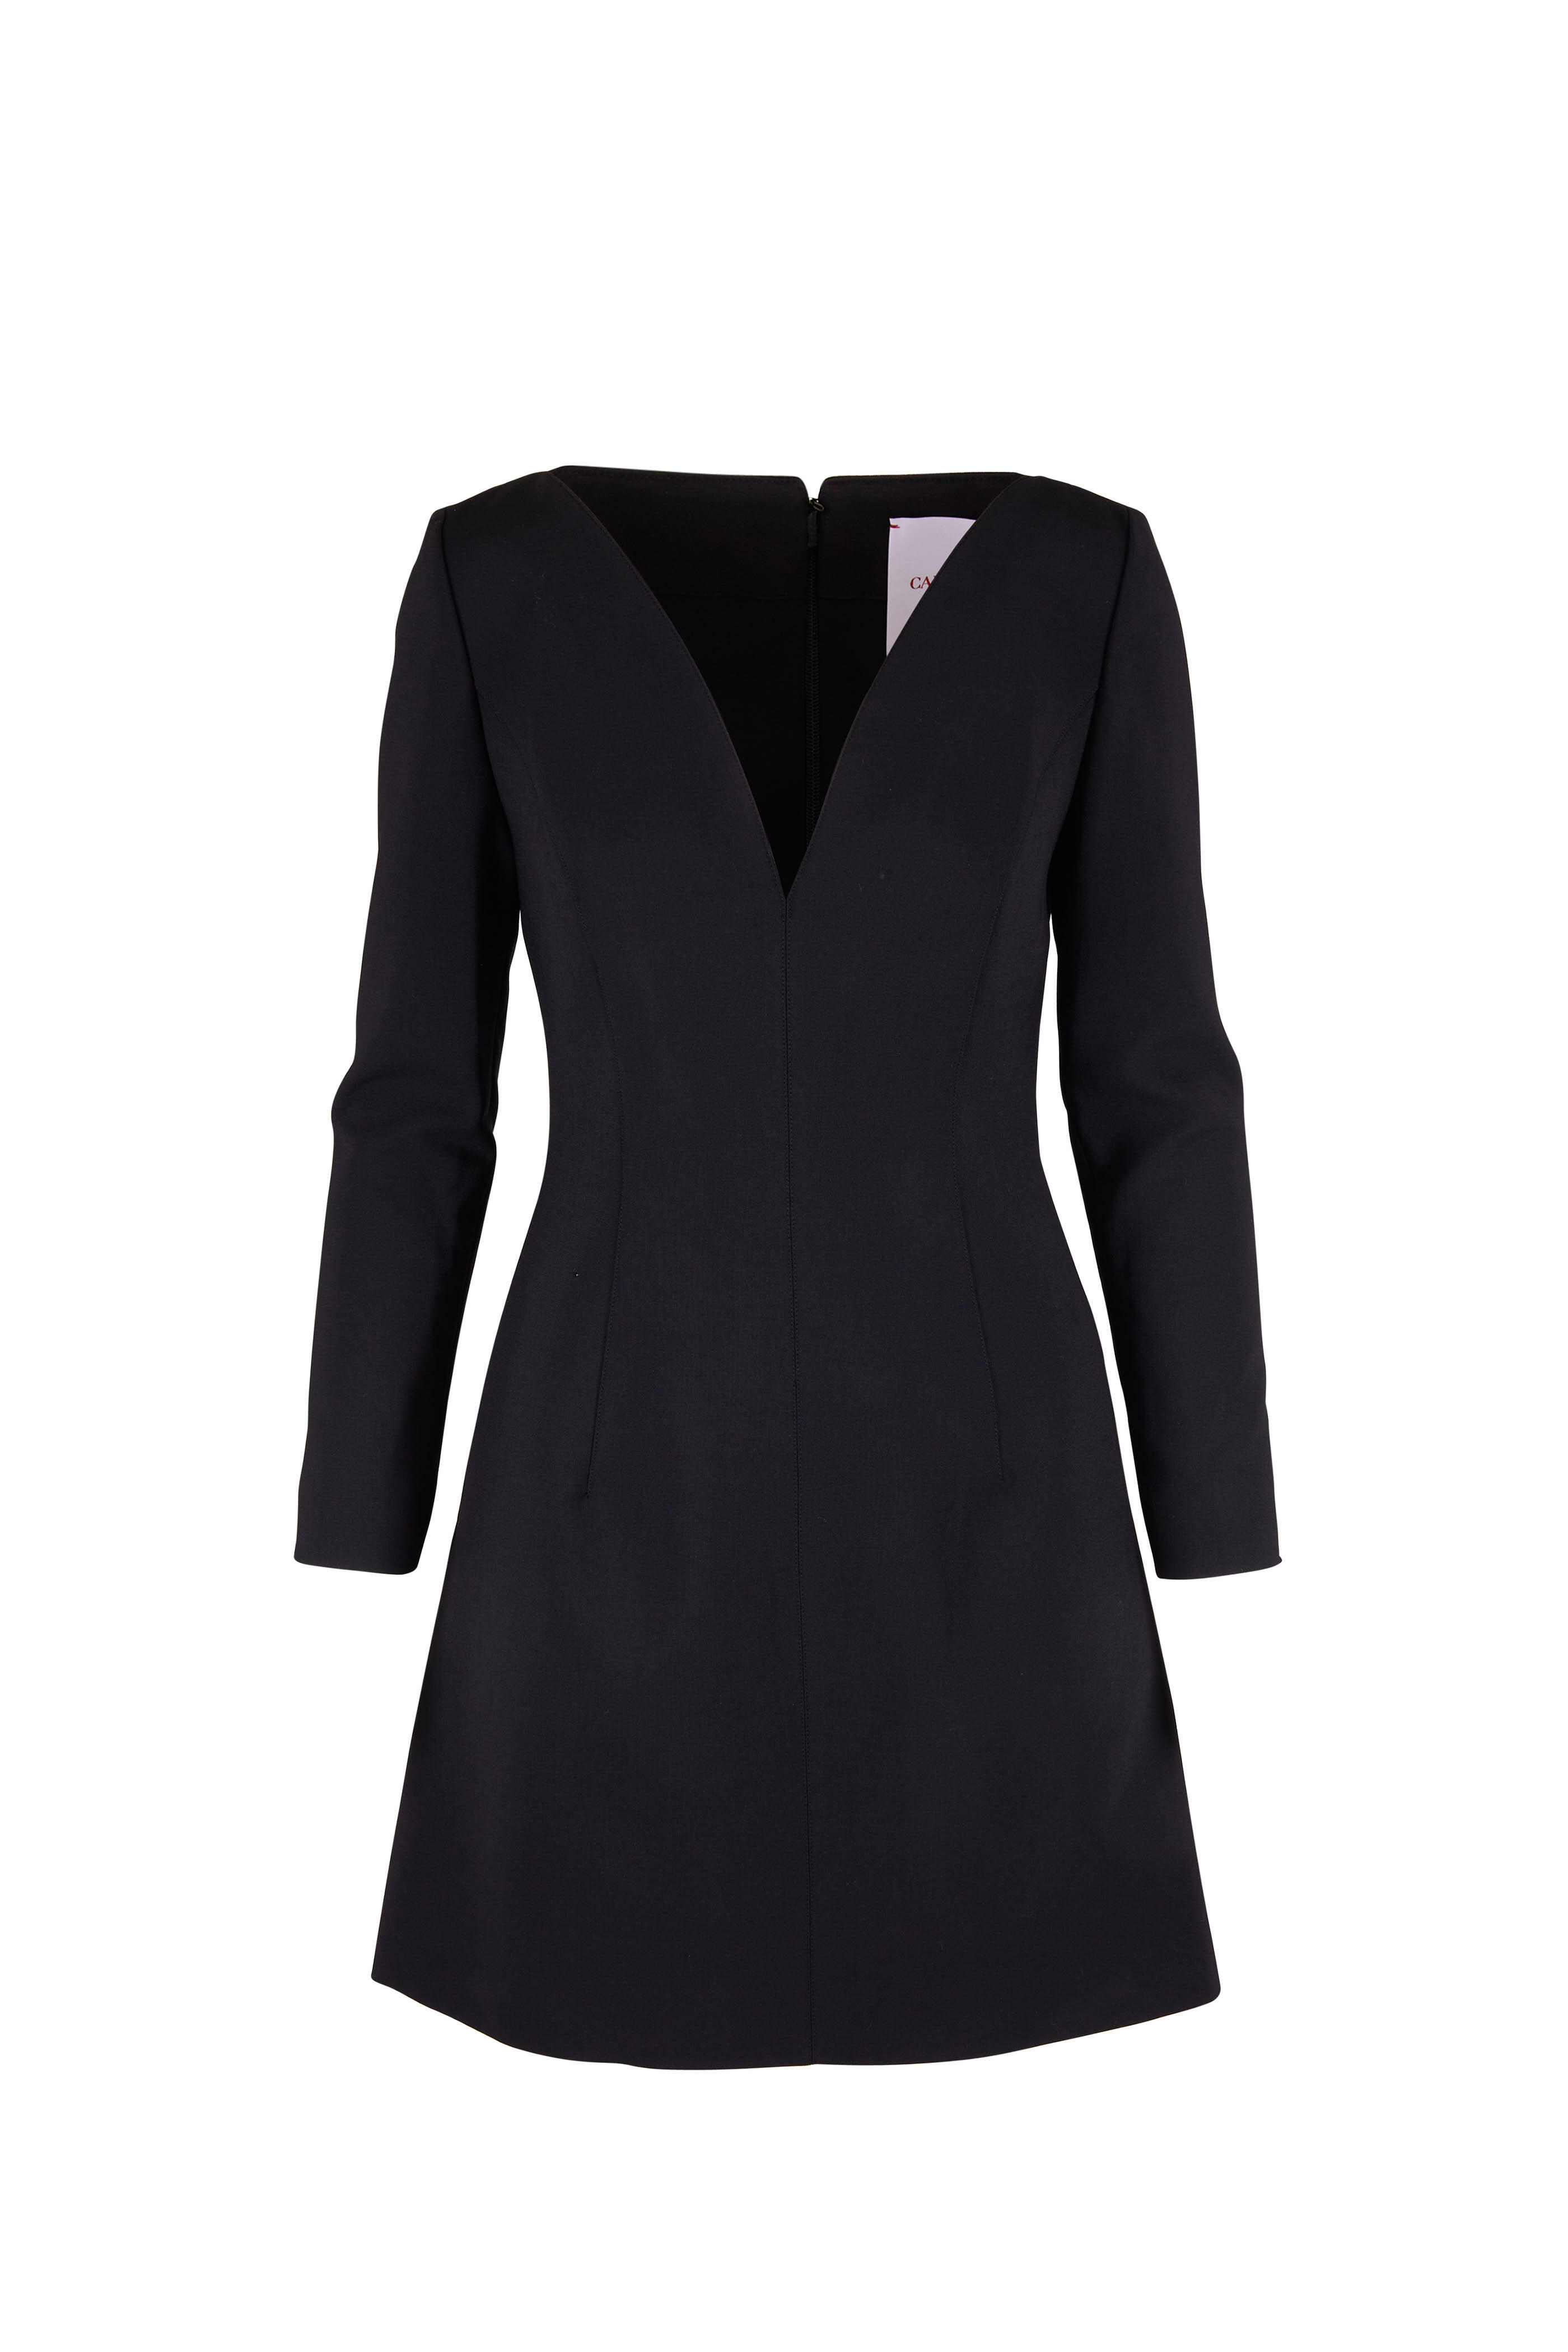 Carolina Herrera - Black Double-Faced Wool Long Sleeve A-Line Dress